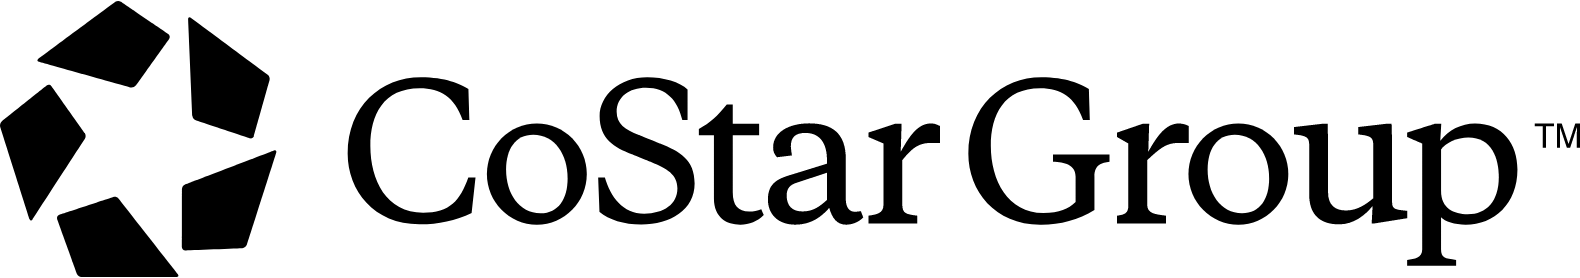 CoStar Group logo large (transparent PNG)